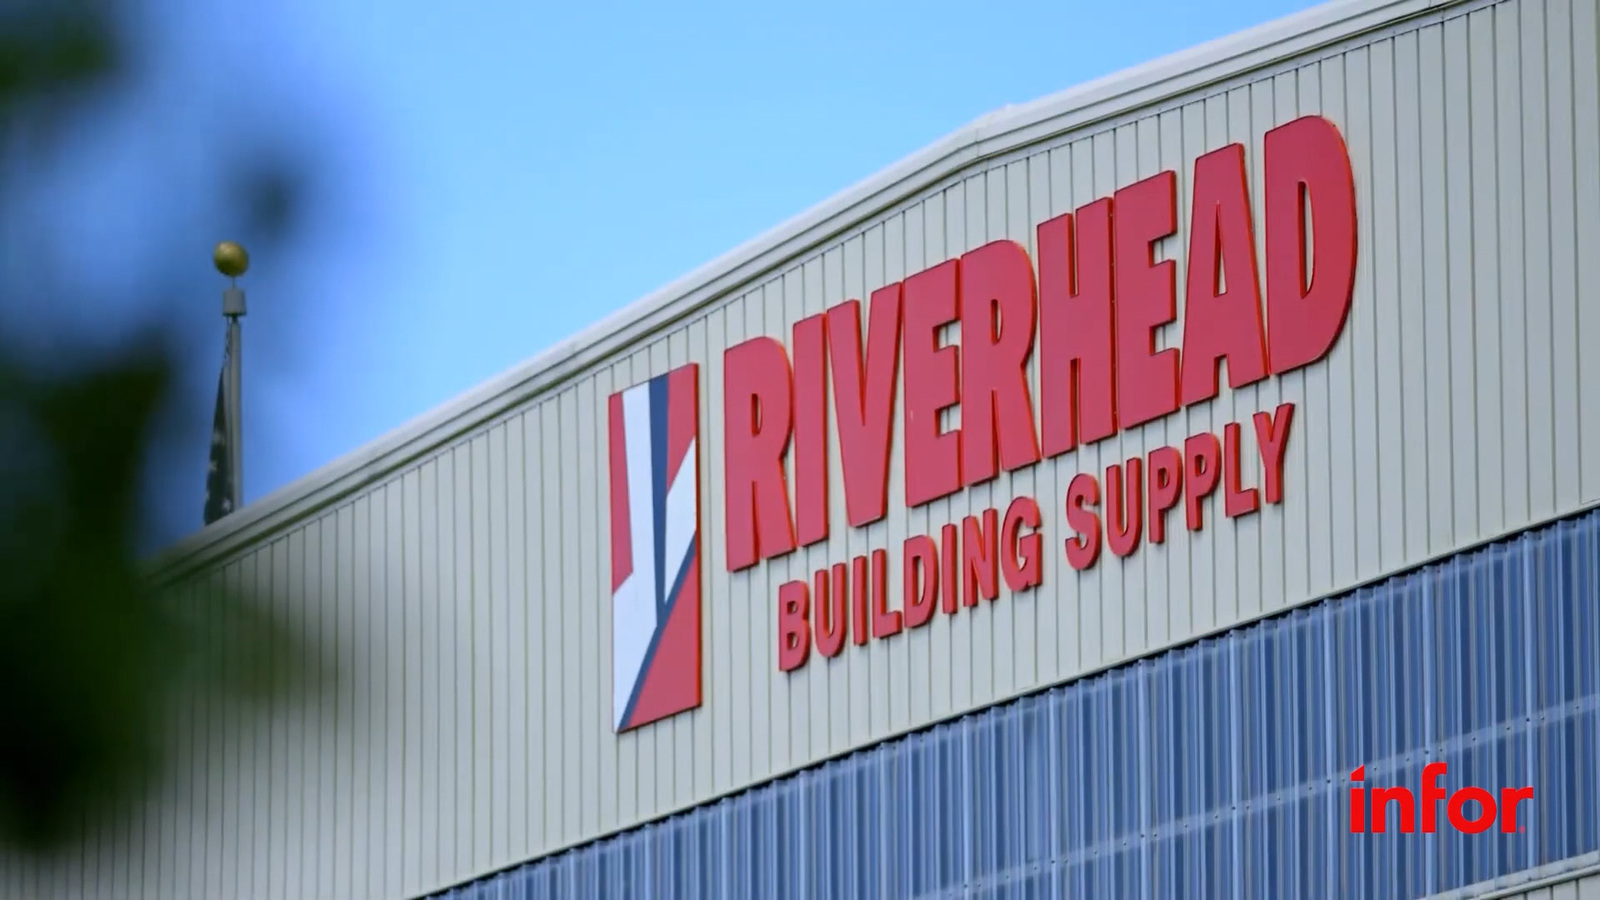 th_Riverhead Building Supply Corporation_Video Case Study_English_1920x1080.jpg